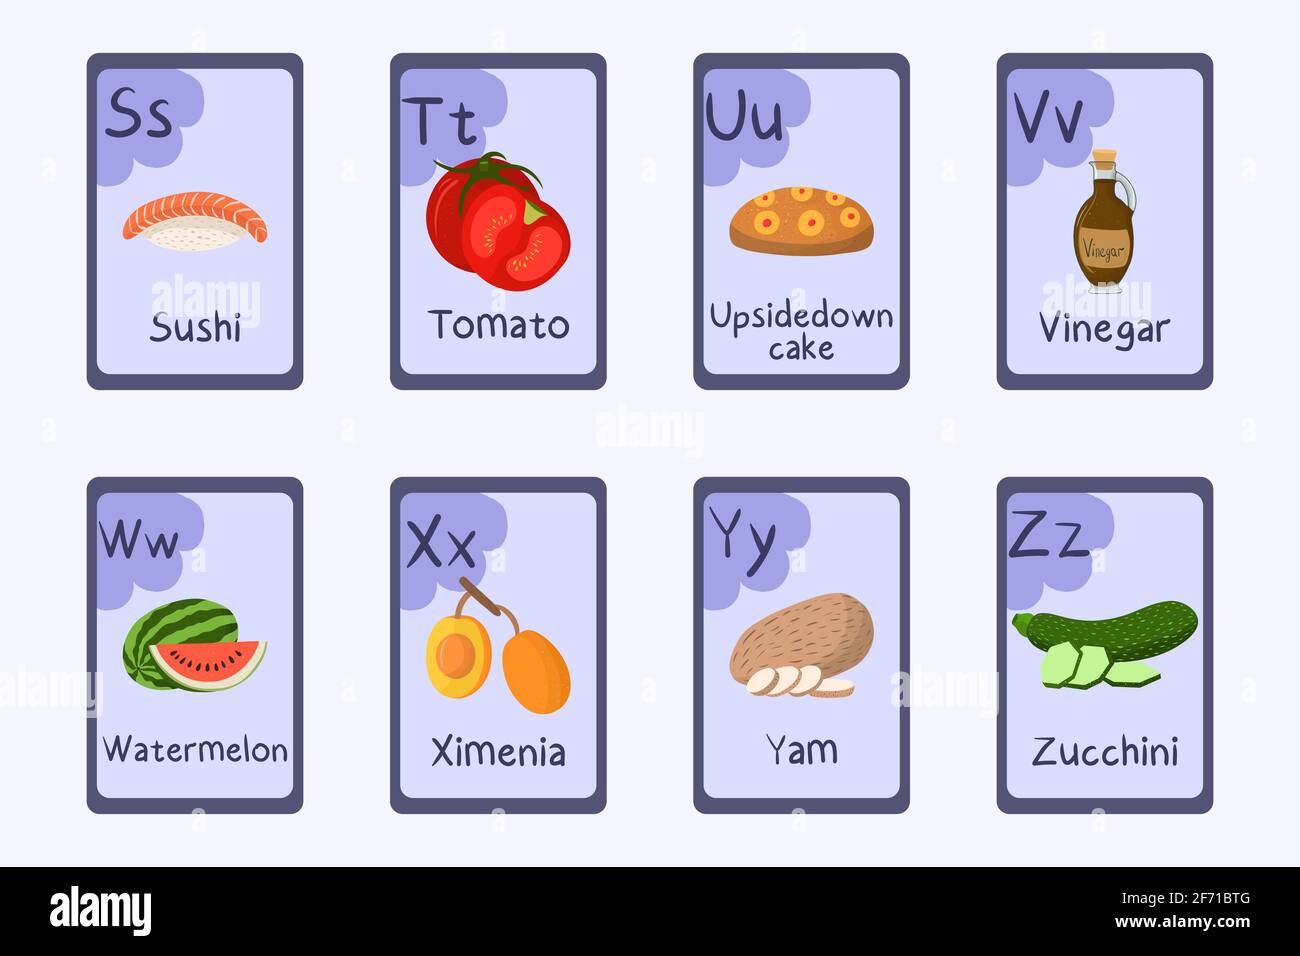 Colorful alphabet flashcard Letters S T U V W X Y Z - sushi tomato upside-down cake vinegar watermelon ximenia yam zucchini. Stock Vector